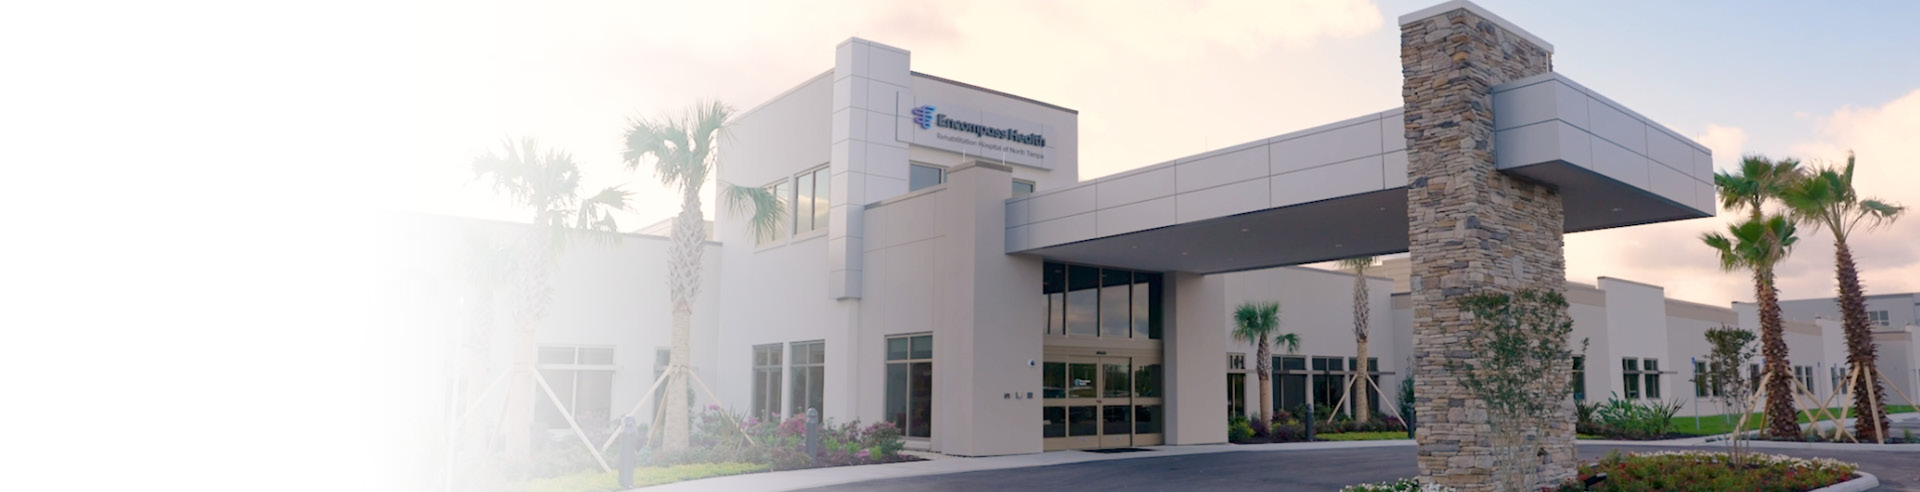 Encompass Health Rehabilitation Hospital of North Tampa exterior